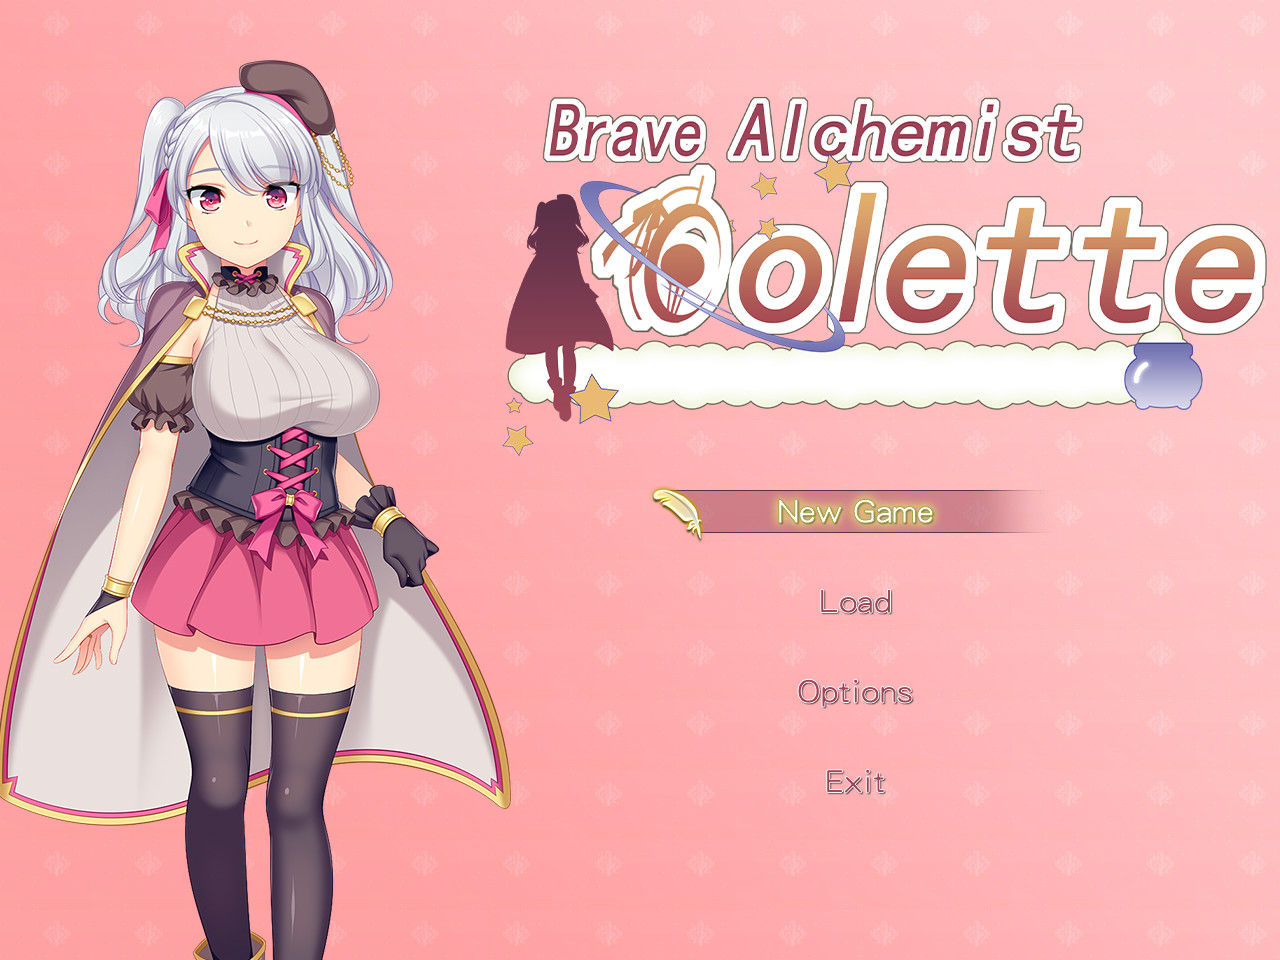 Find the best laptops for Brave Alchemist Colette